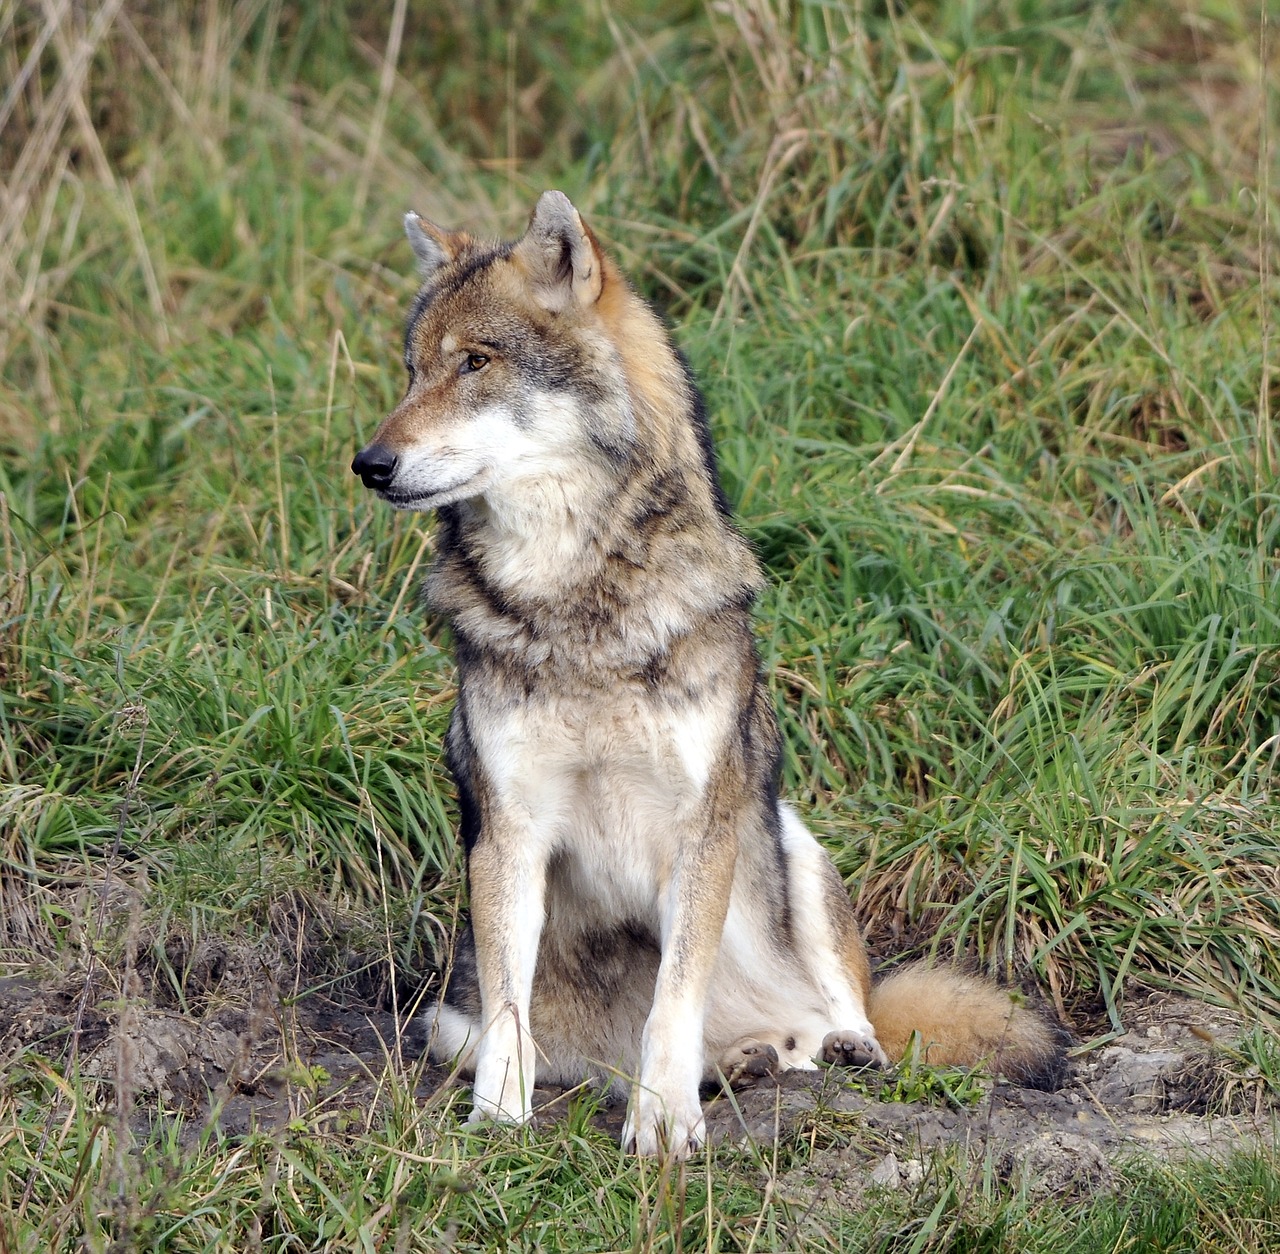 wildlife park poing wolf free photo